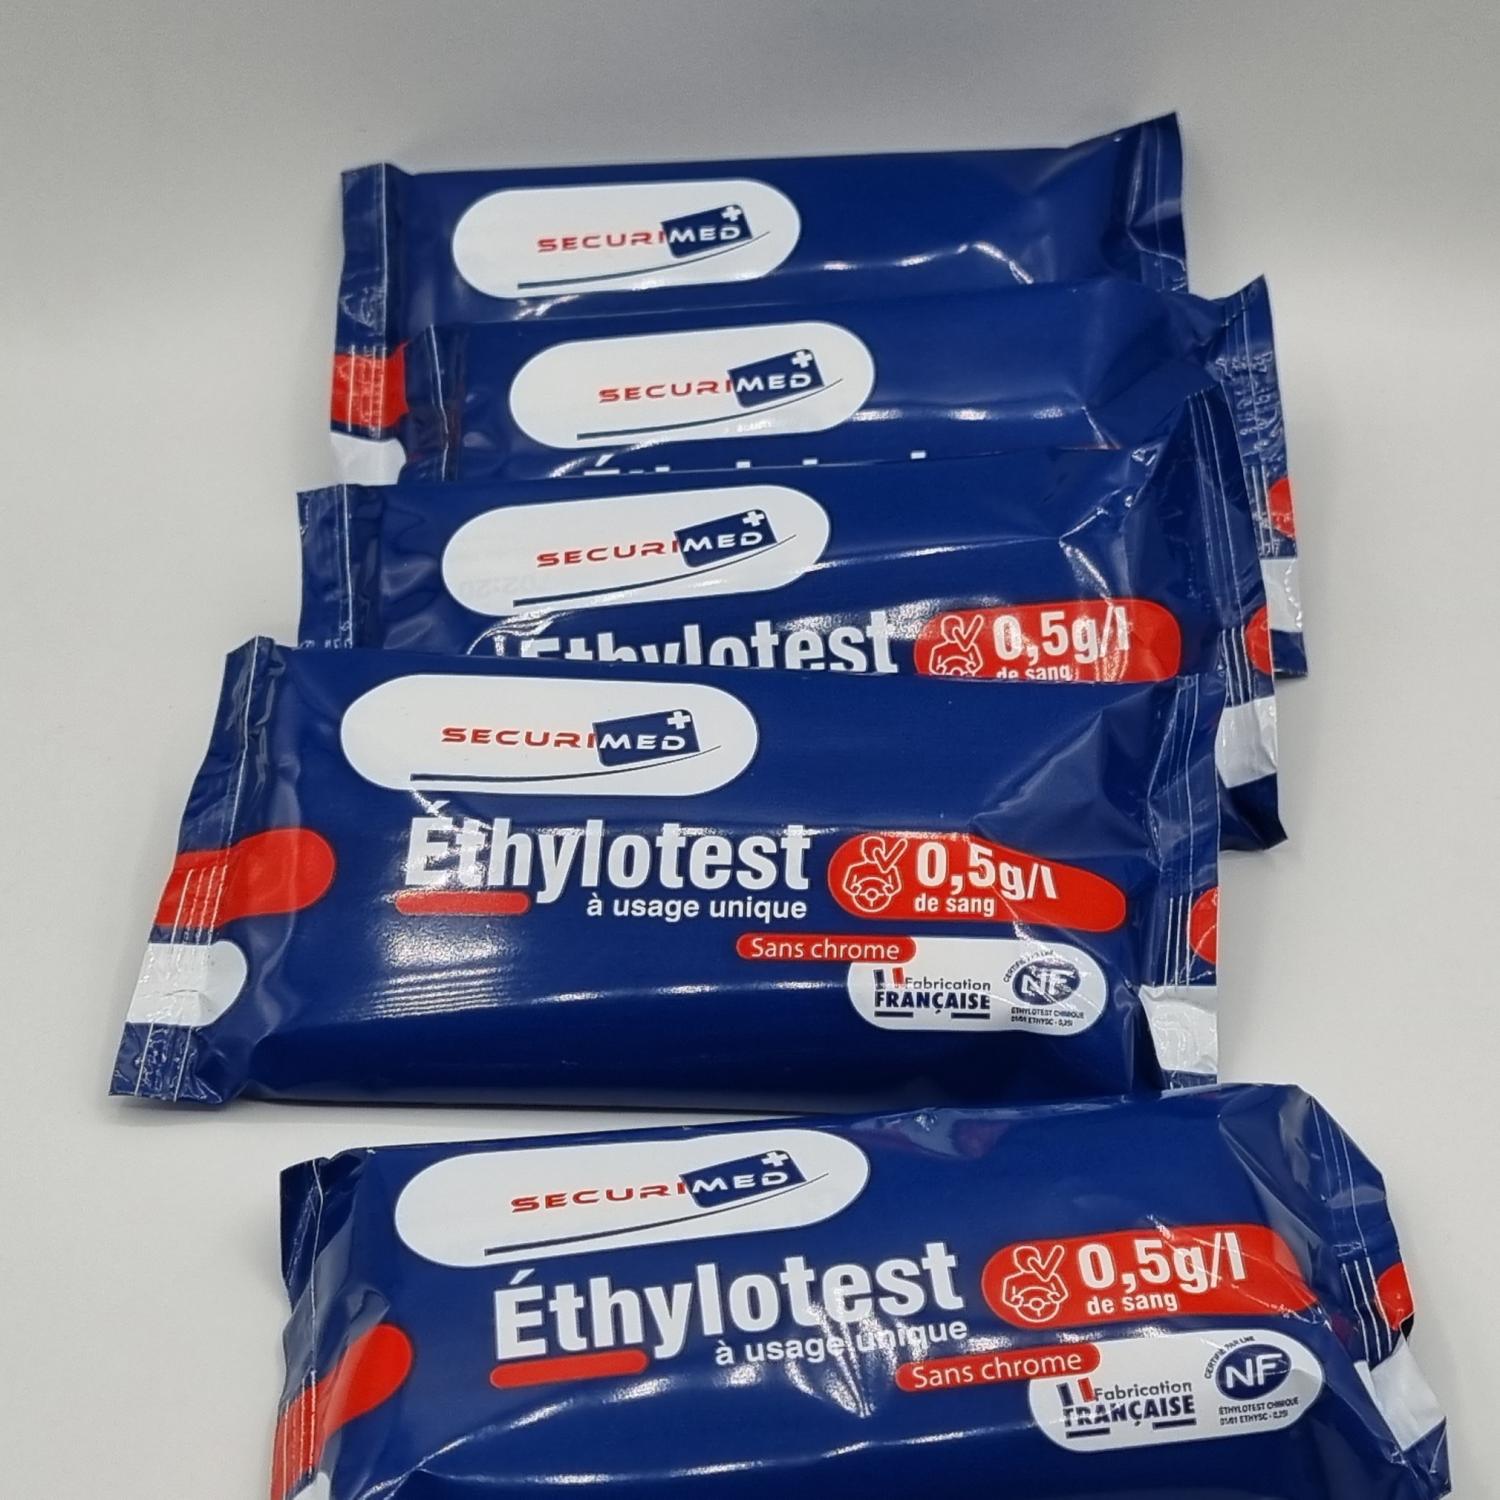 Ethylotest 0,5